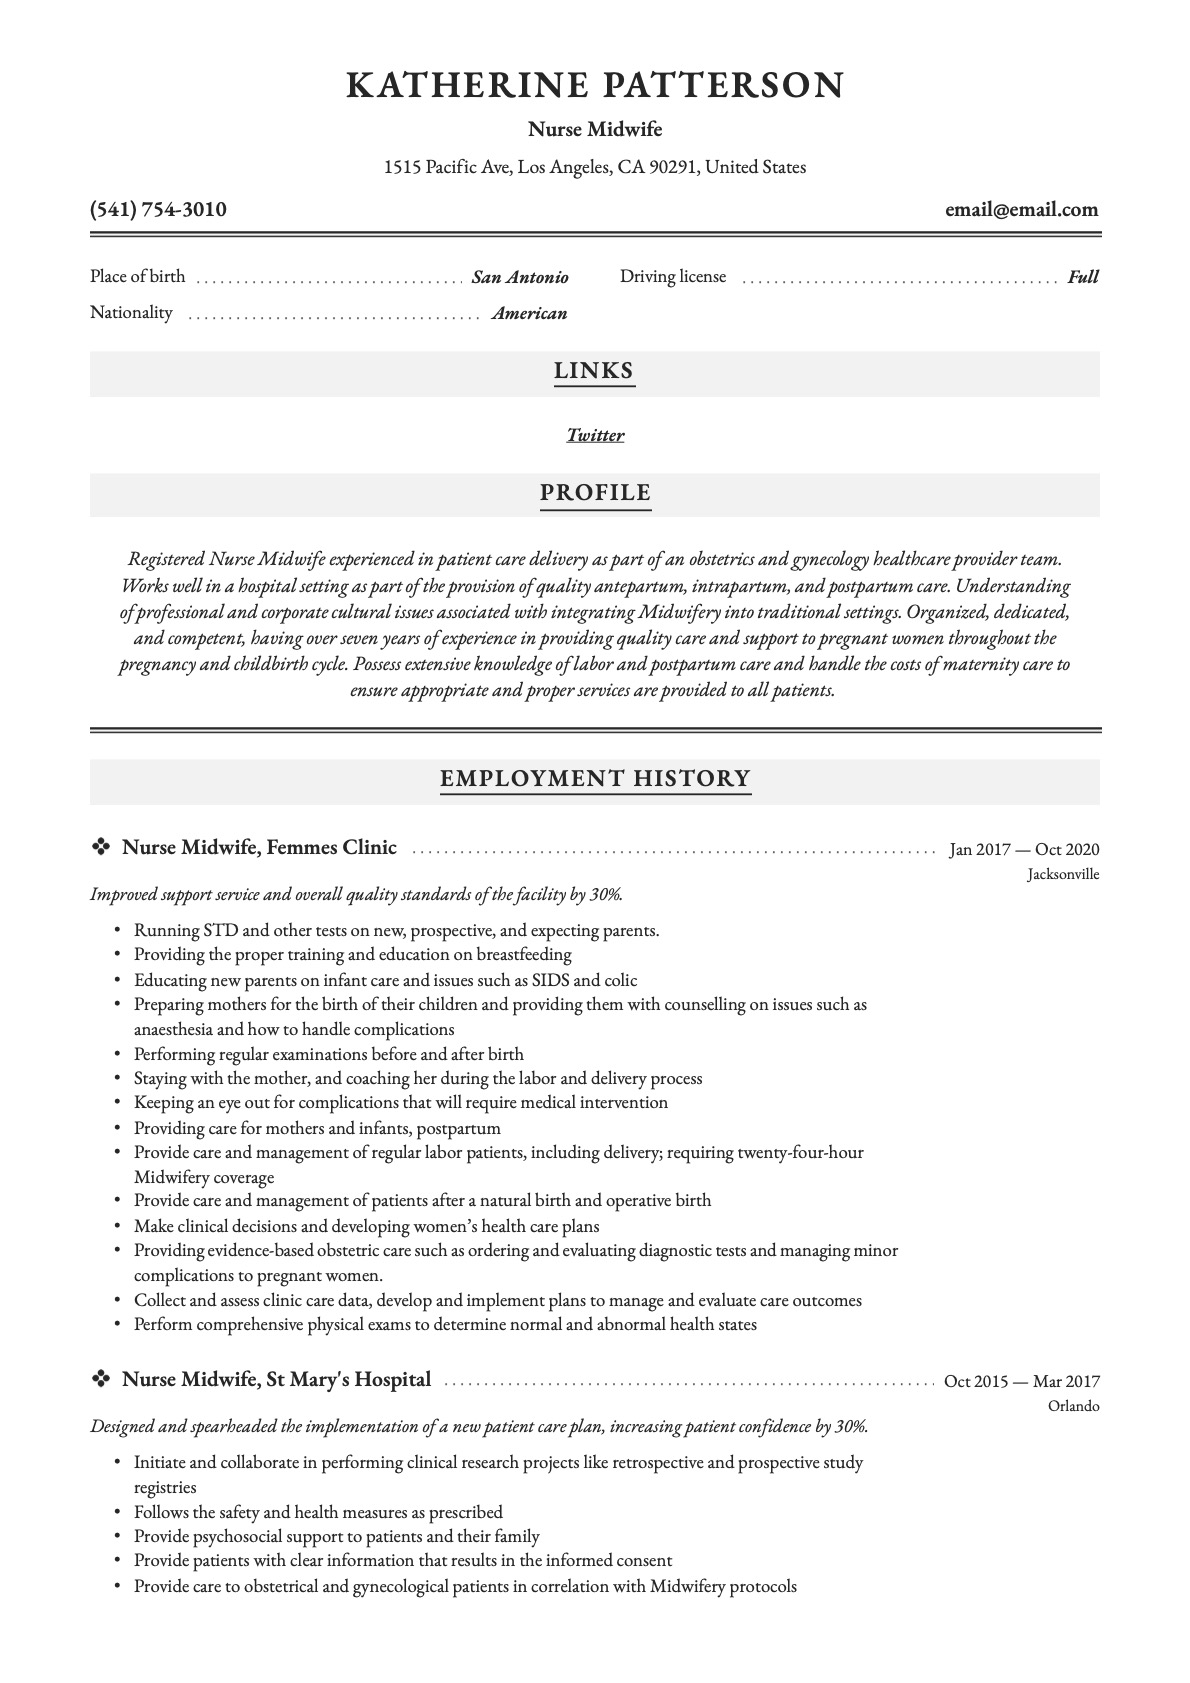 Example Resume Nurse Midwife-10